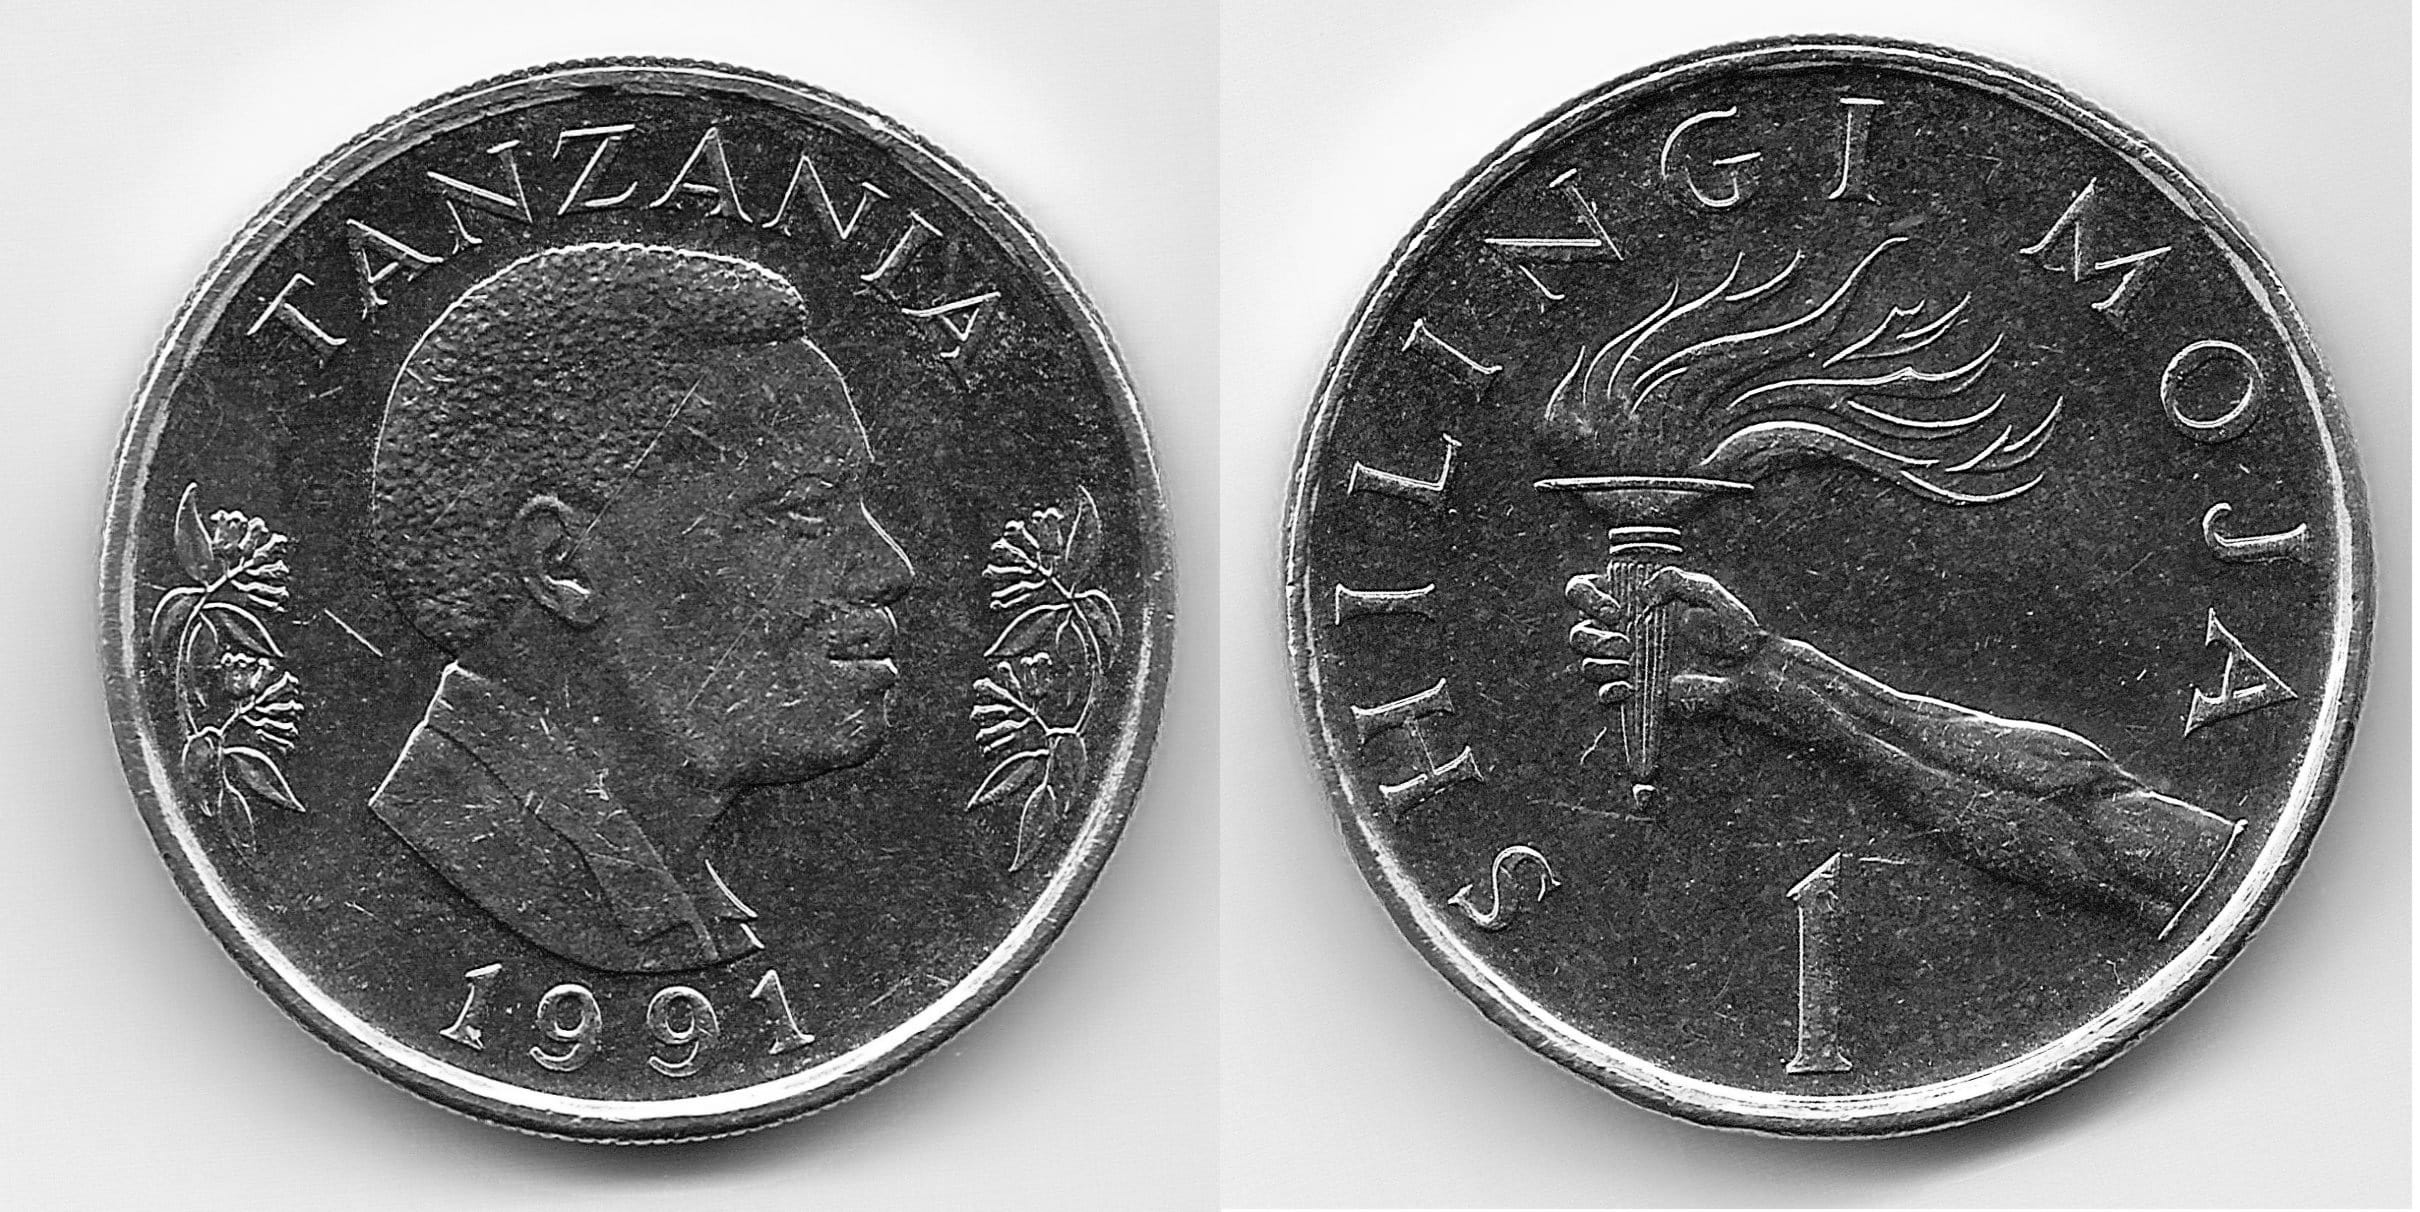 Tanzania 1 shilling coin